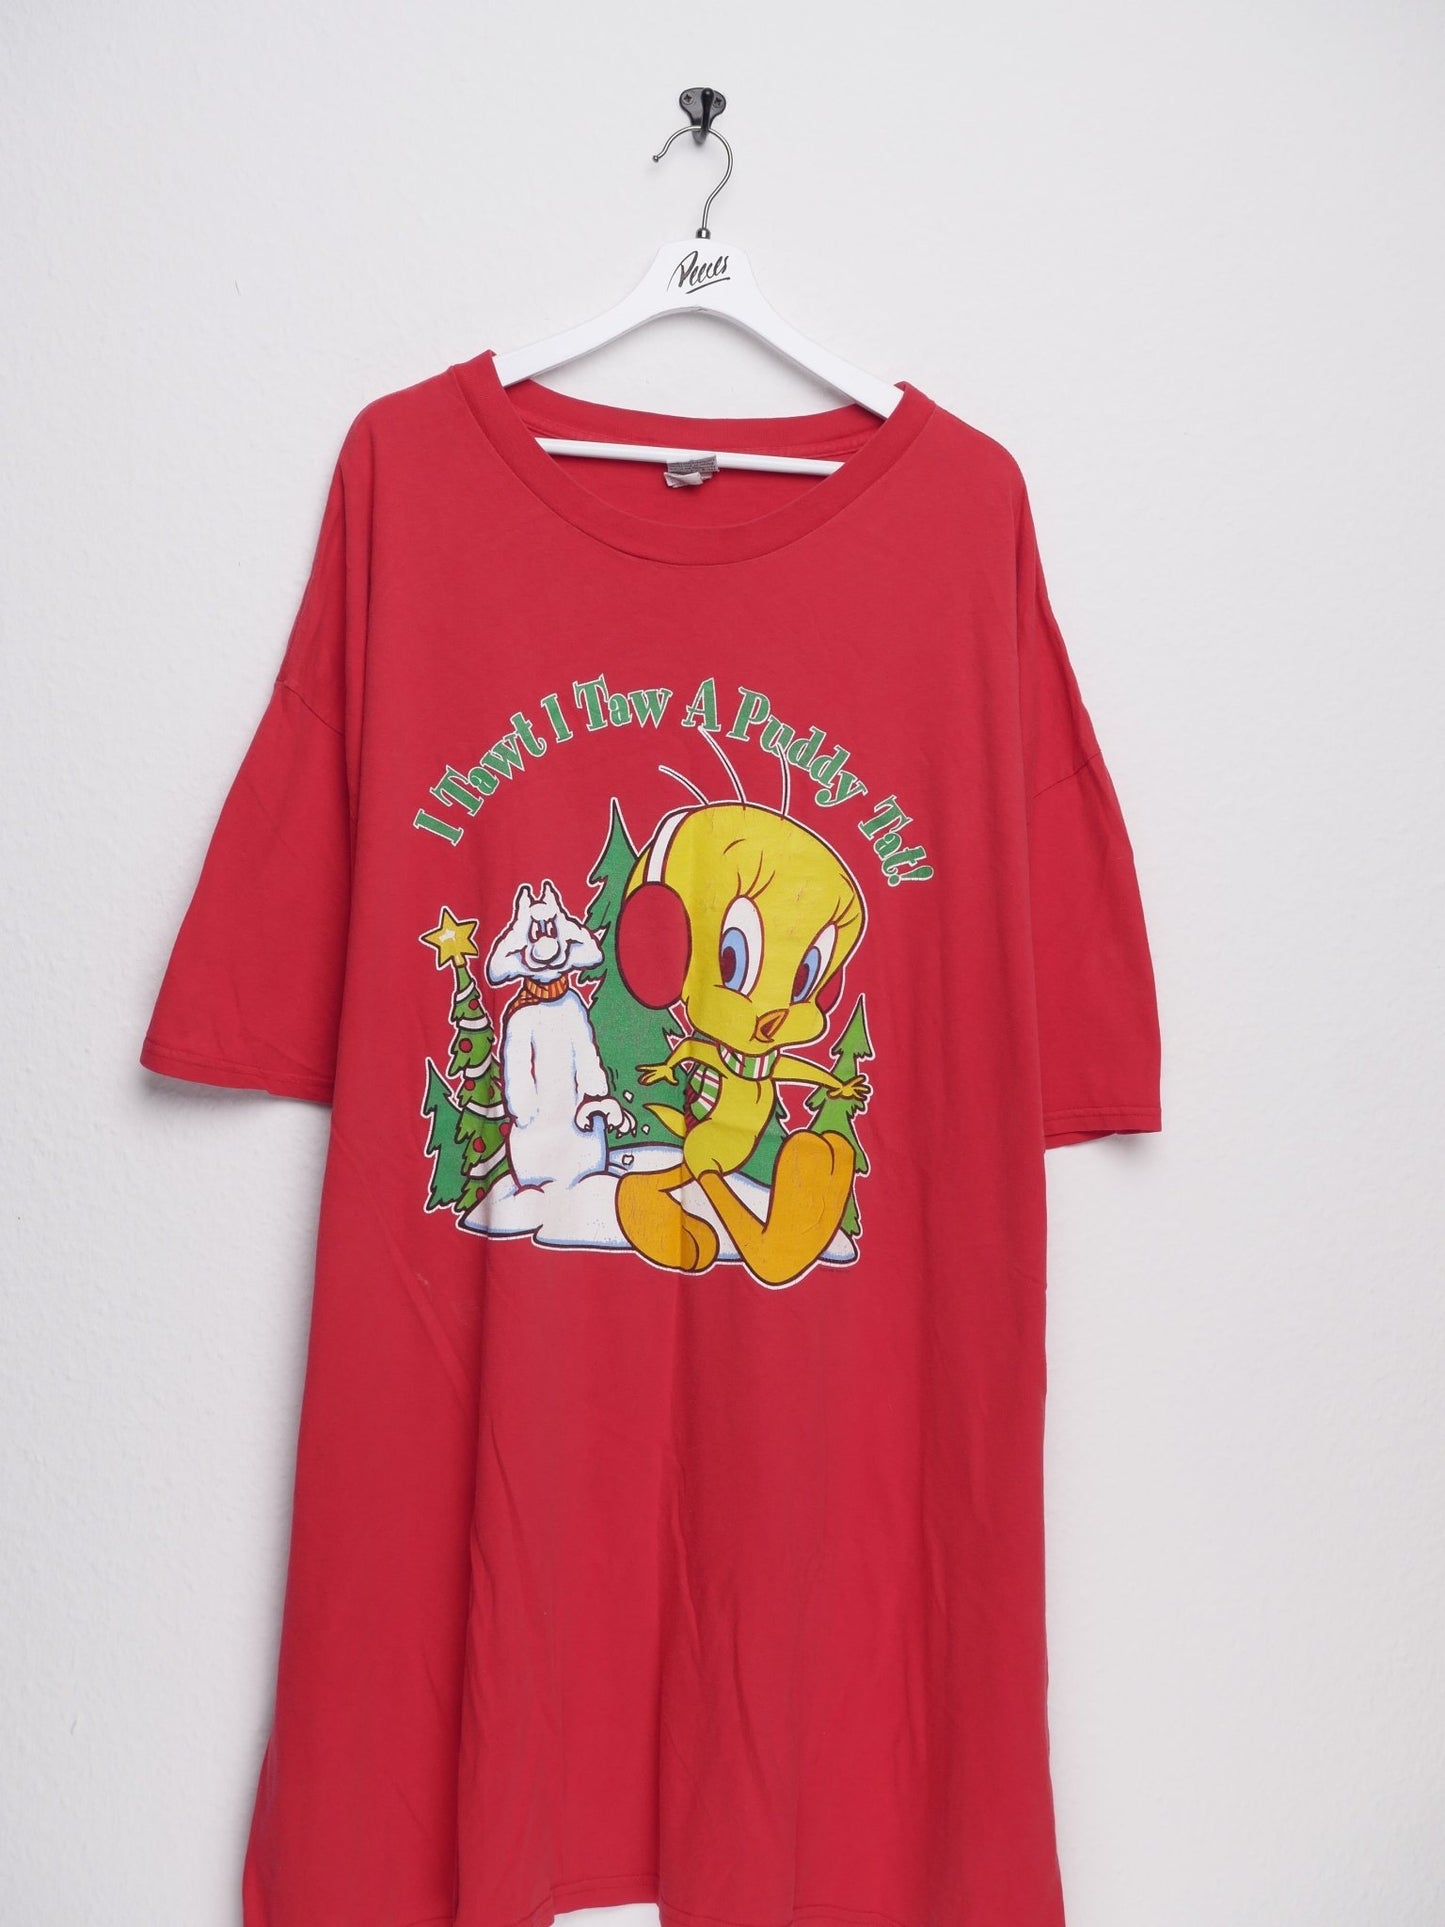 Looney Tunes printed Graphic Vintage Shirt - Peeces